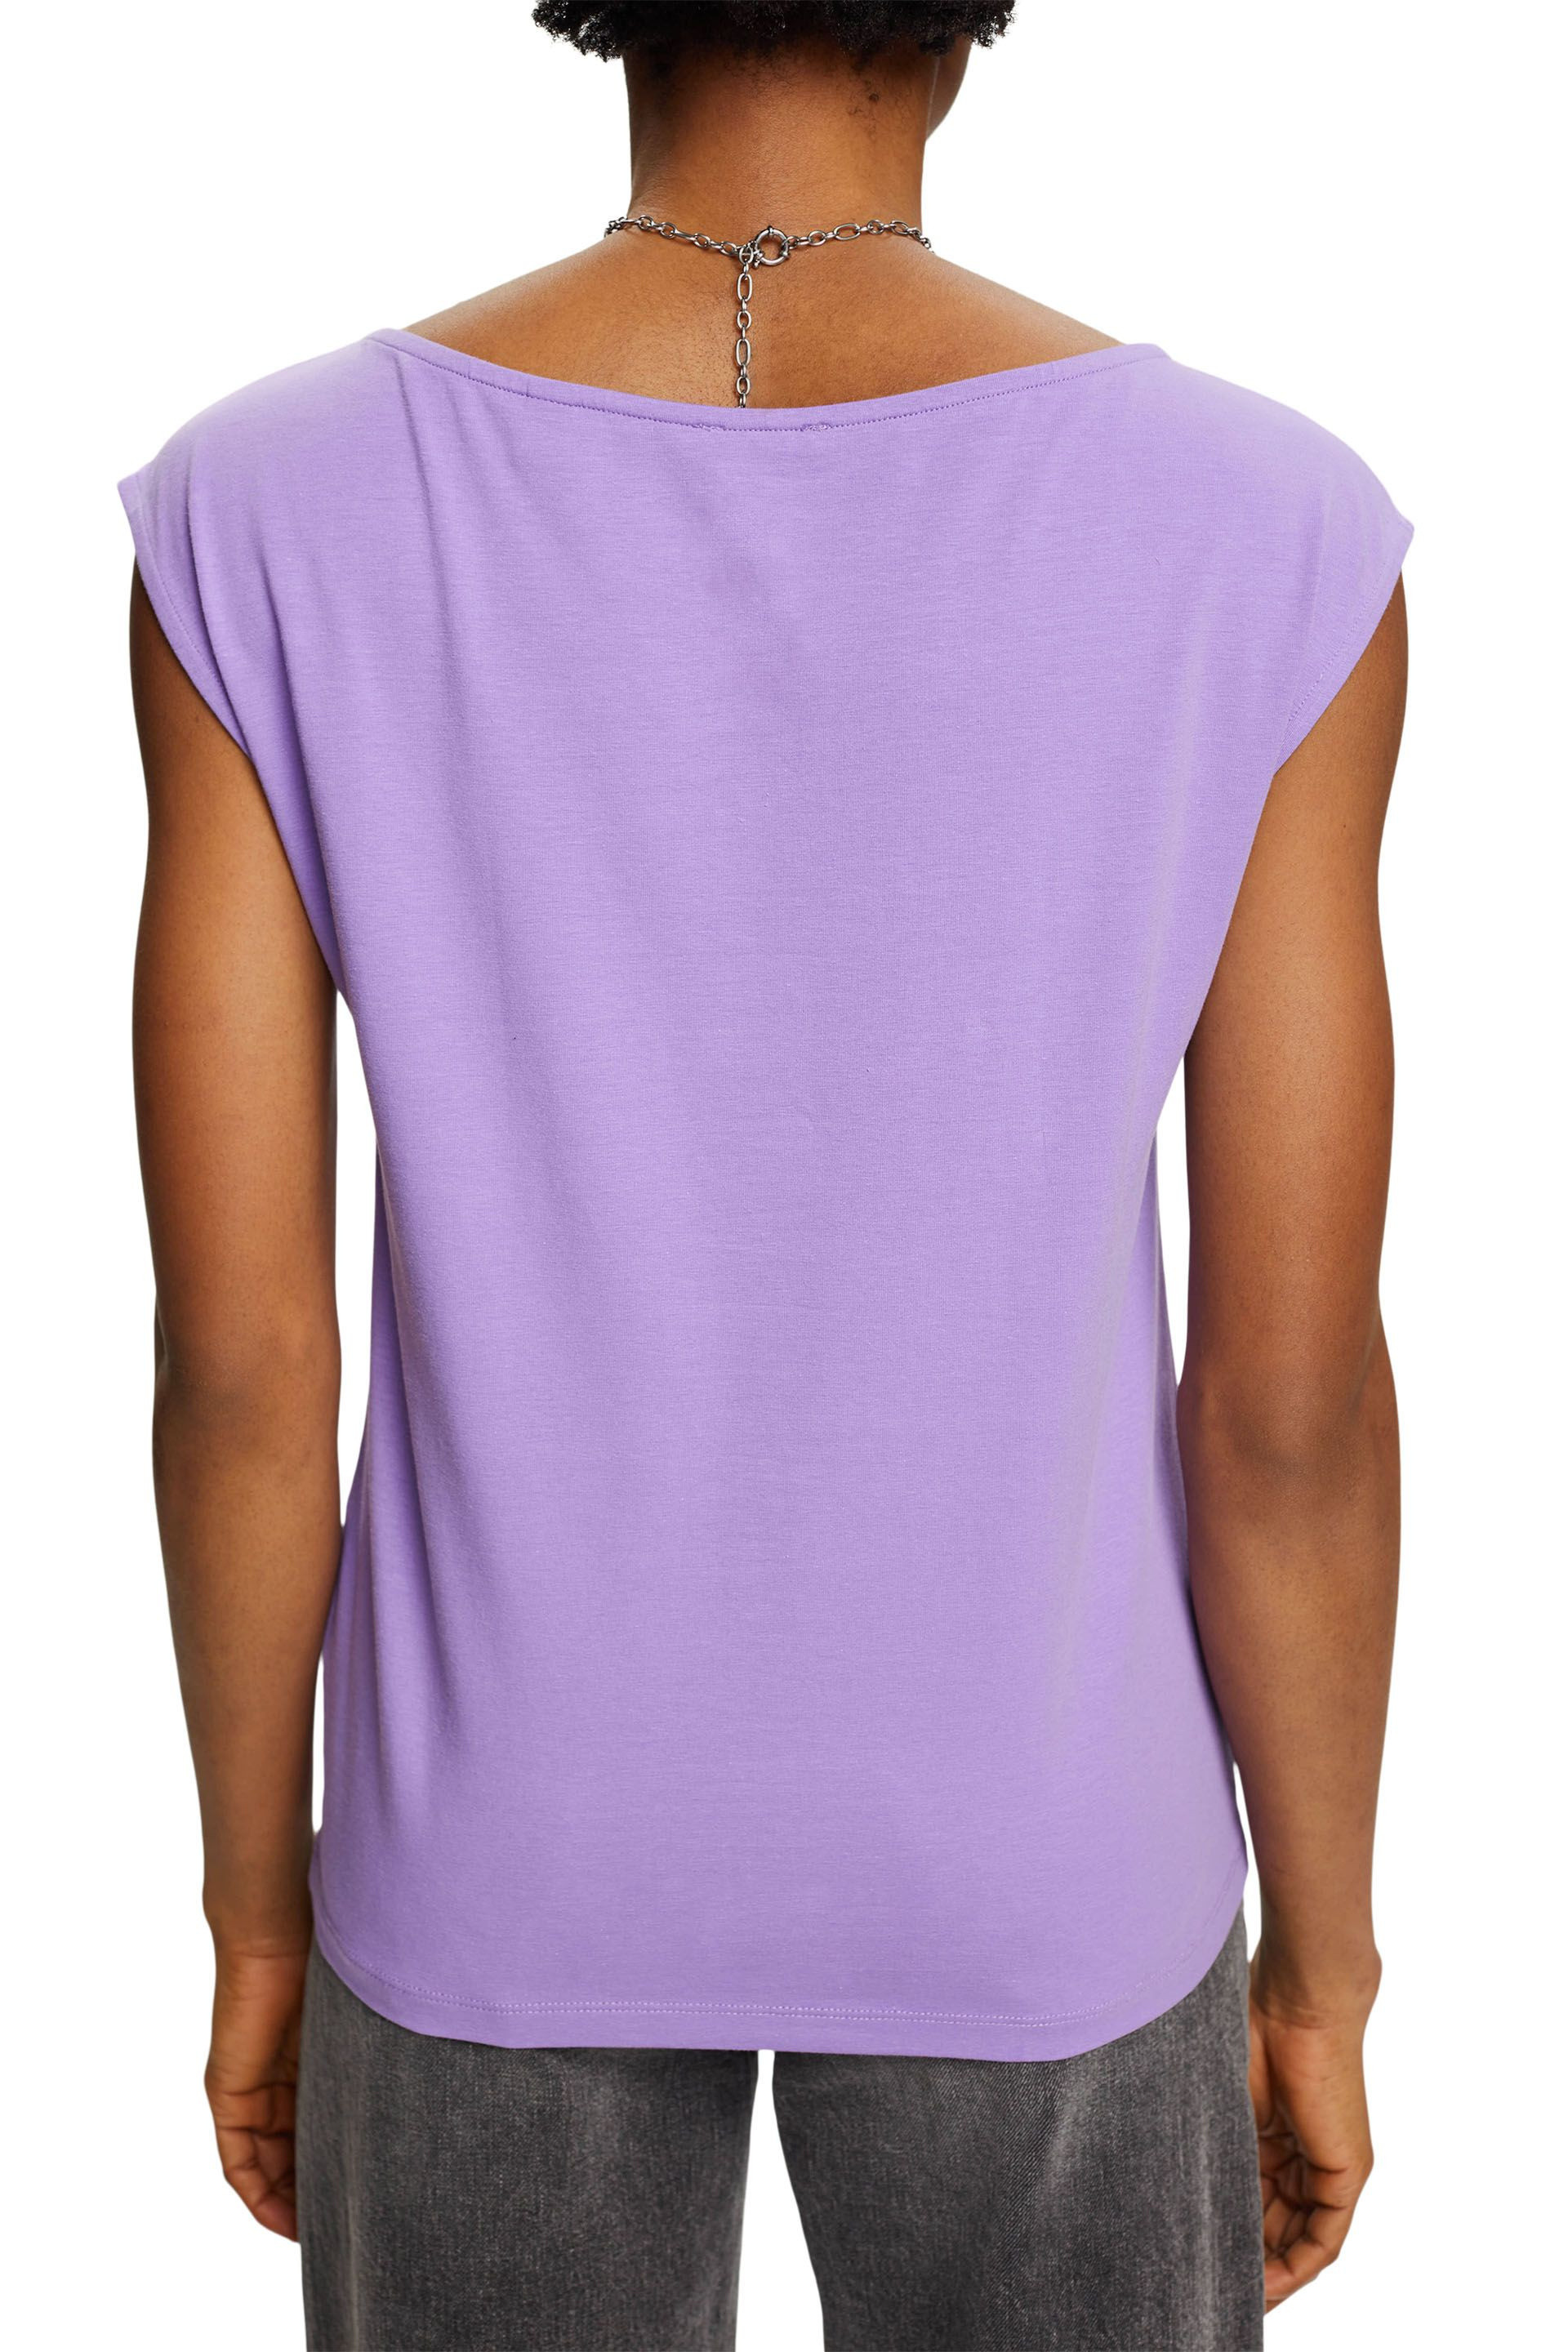 Esprit - T-shirt in cotone elasticizzato, Viola lilla, large image number 3